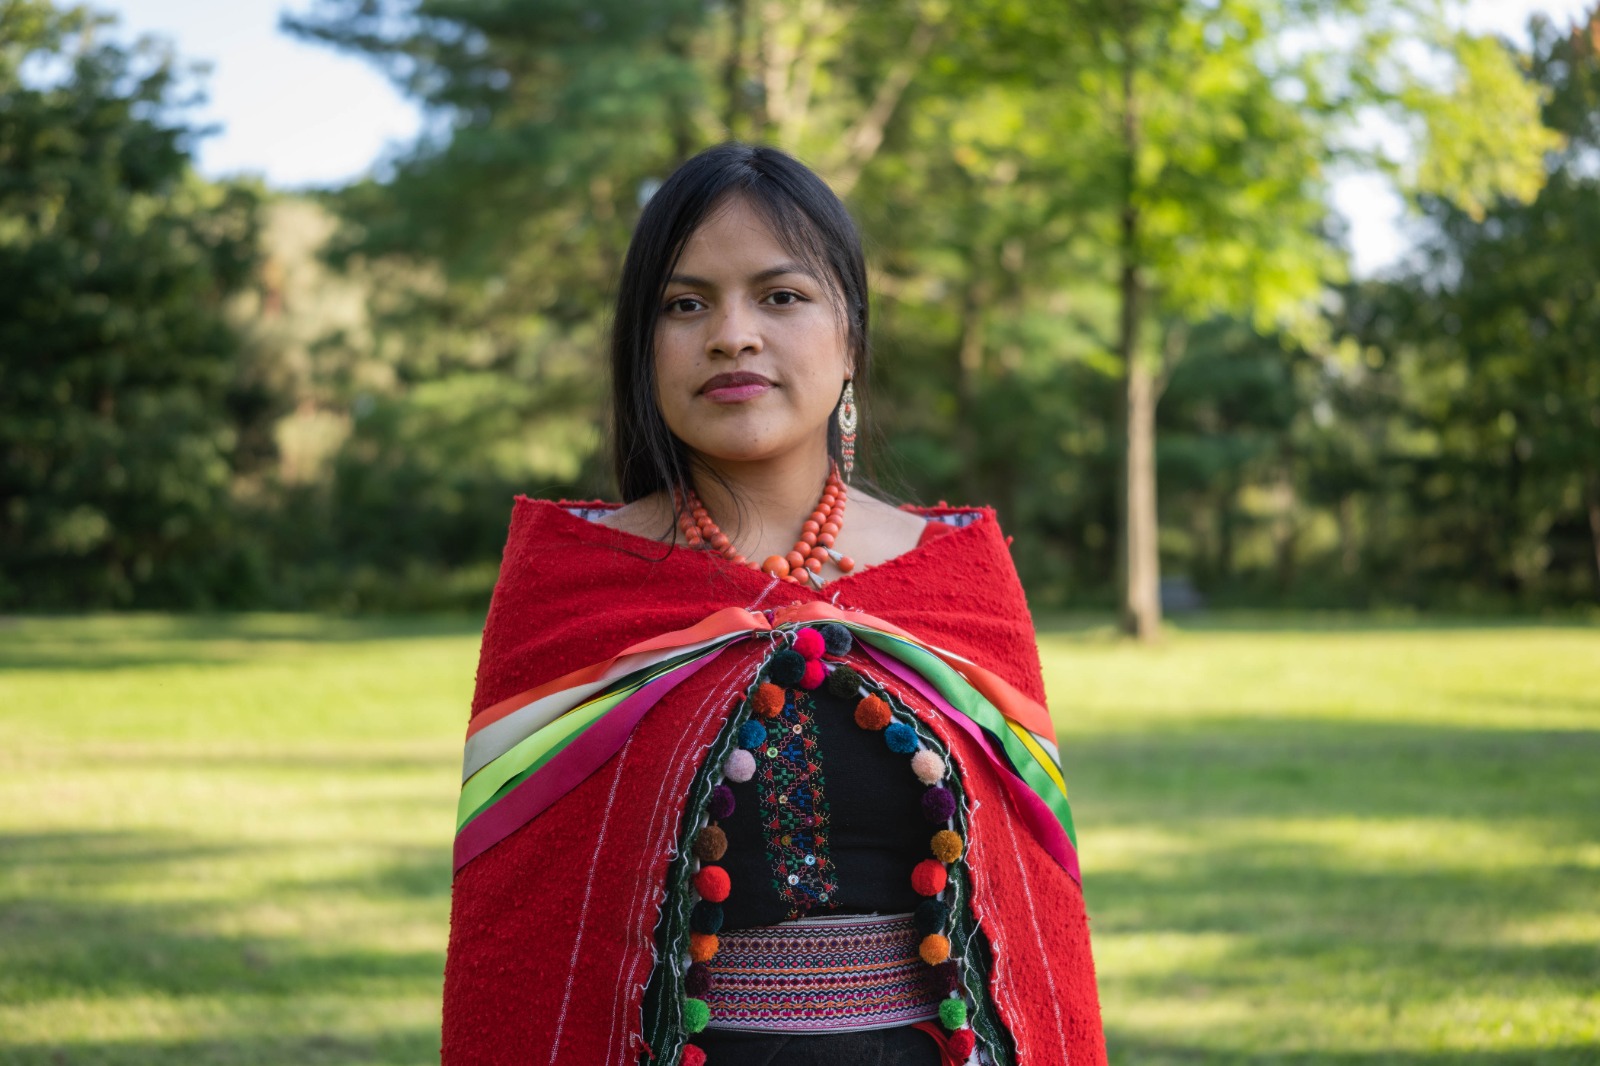 Soledad Chango portrait in red cloak